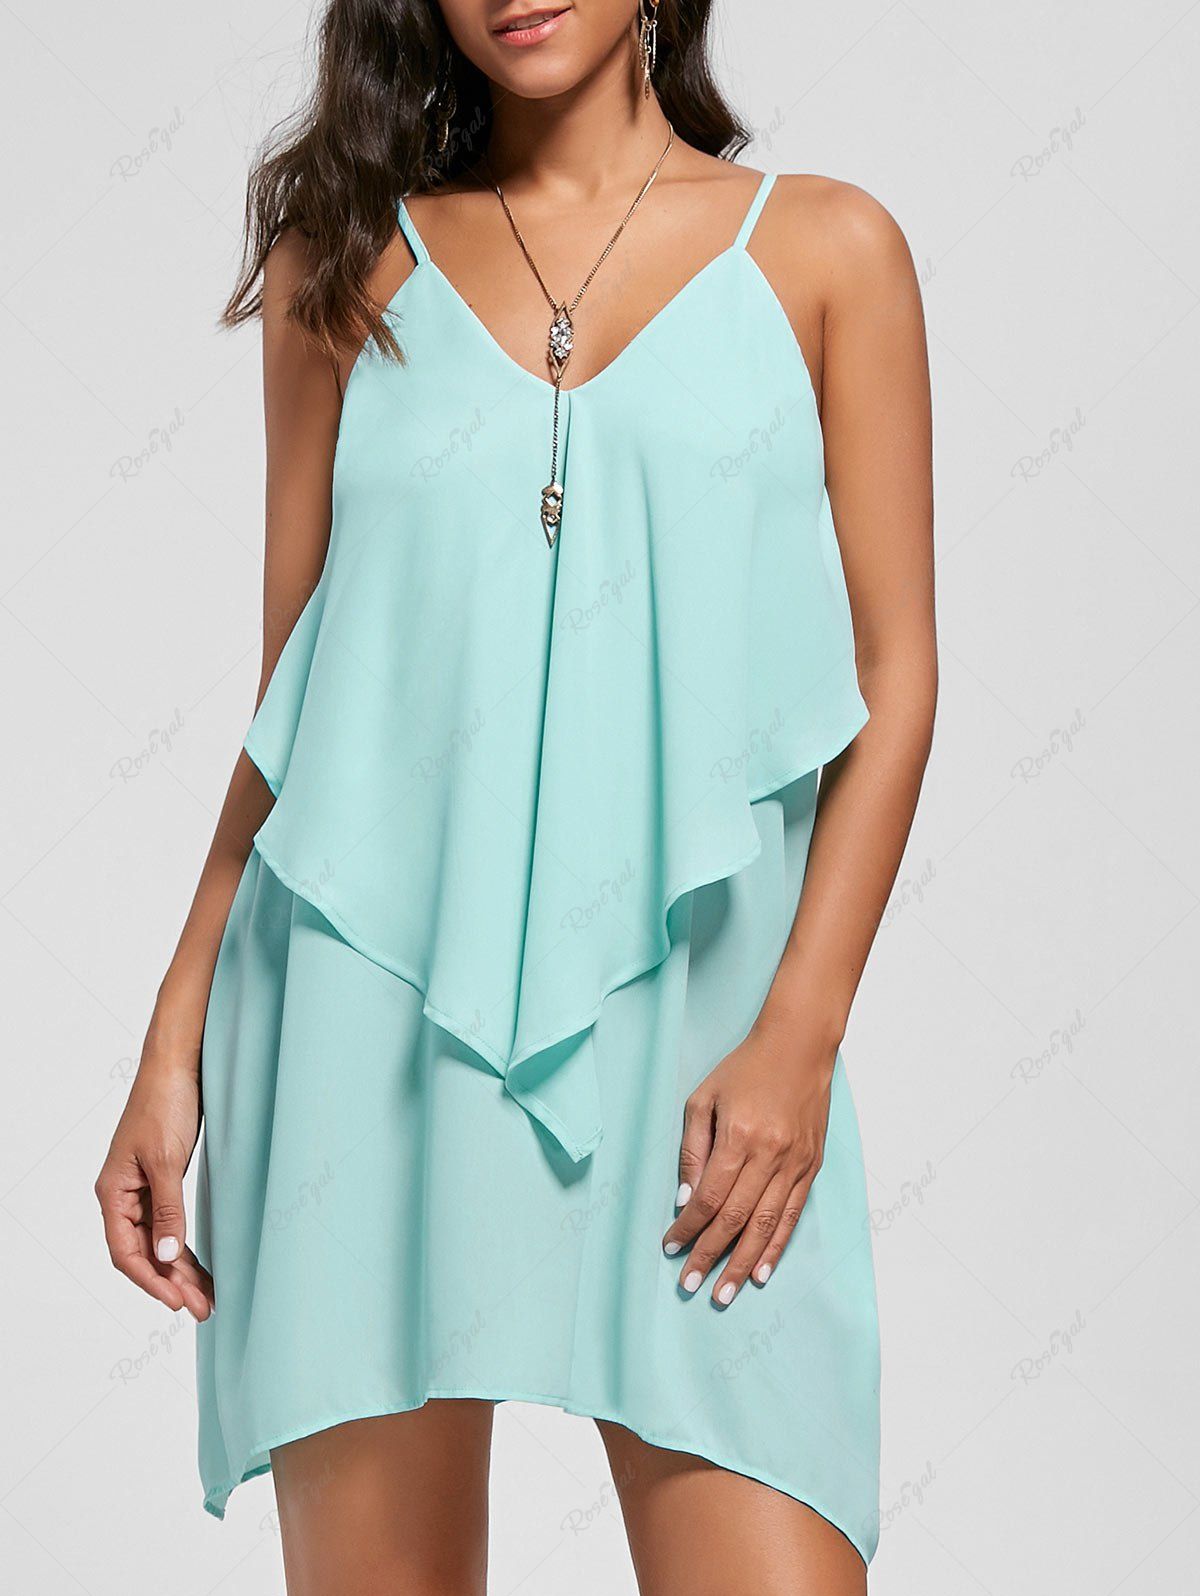 Fancy Plus Size Ruffles Overlay Cami Dress  